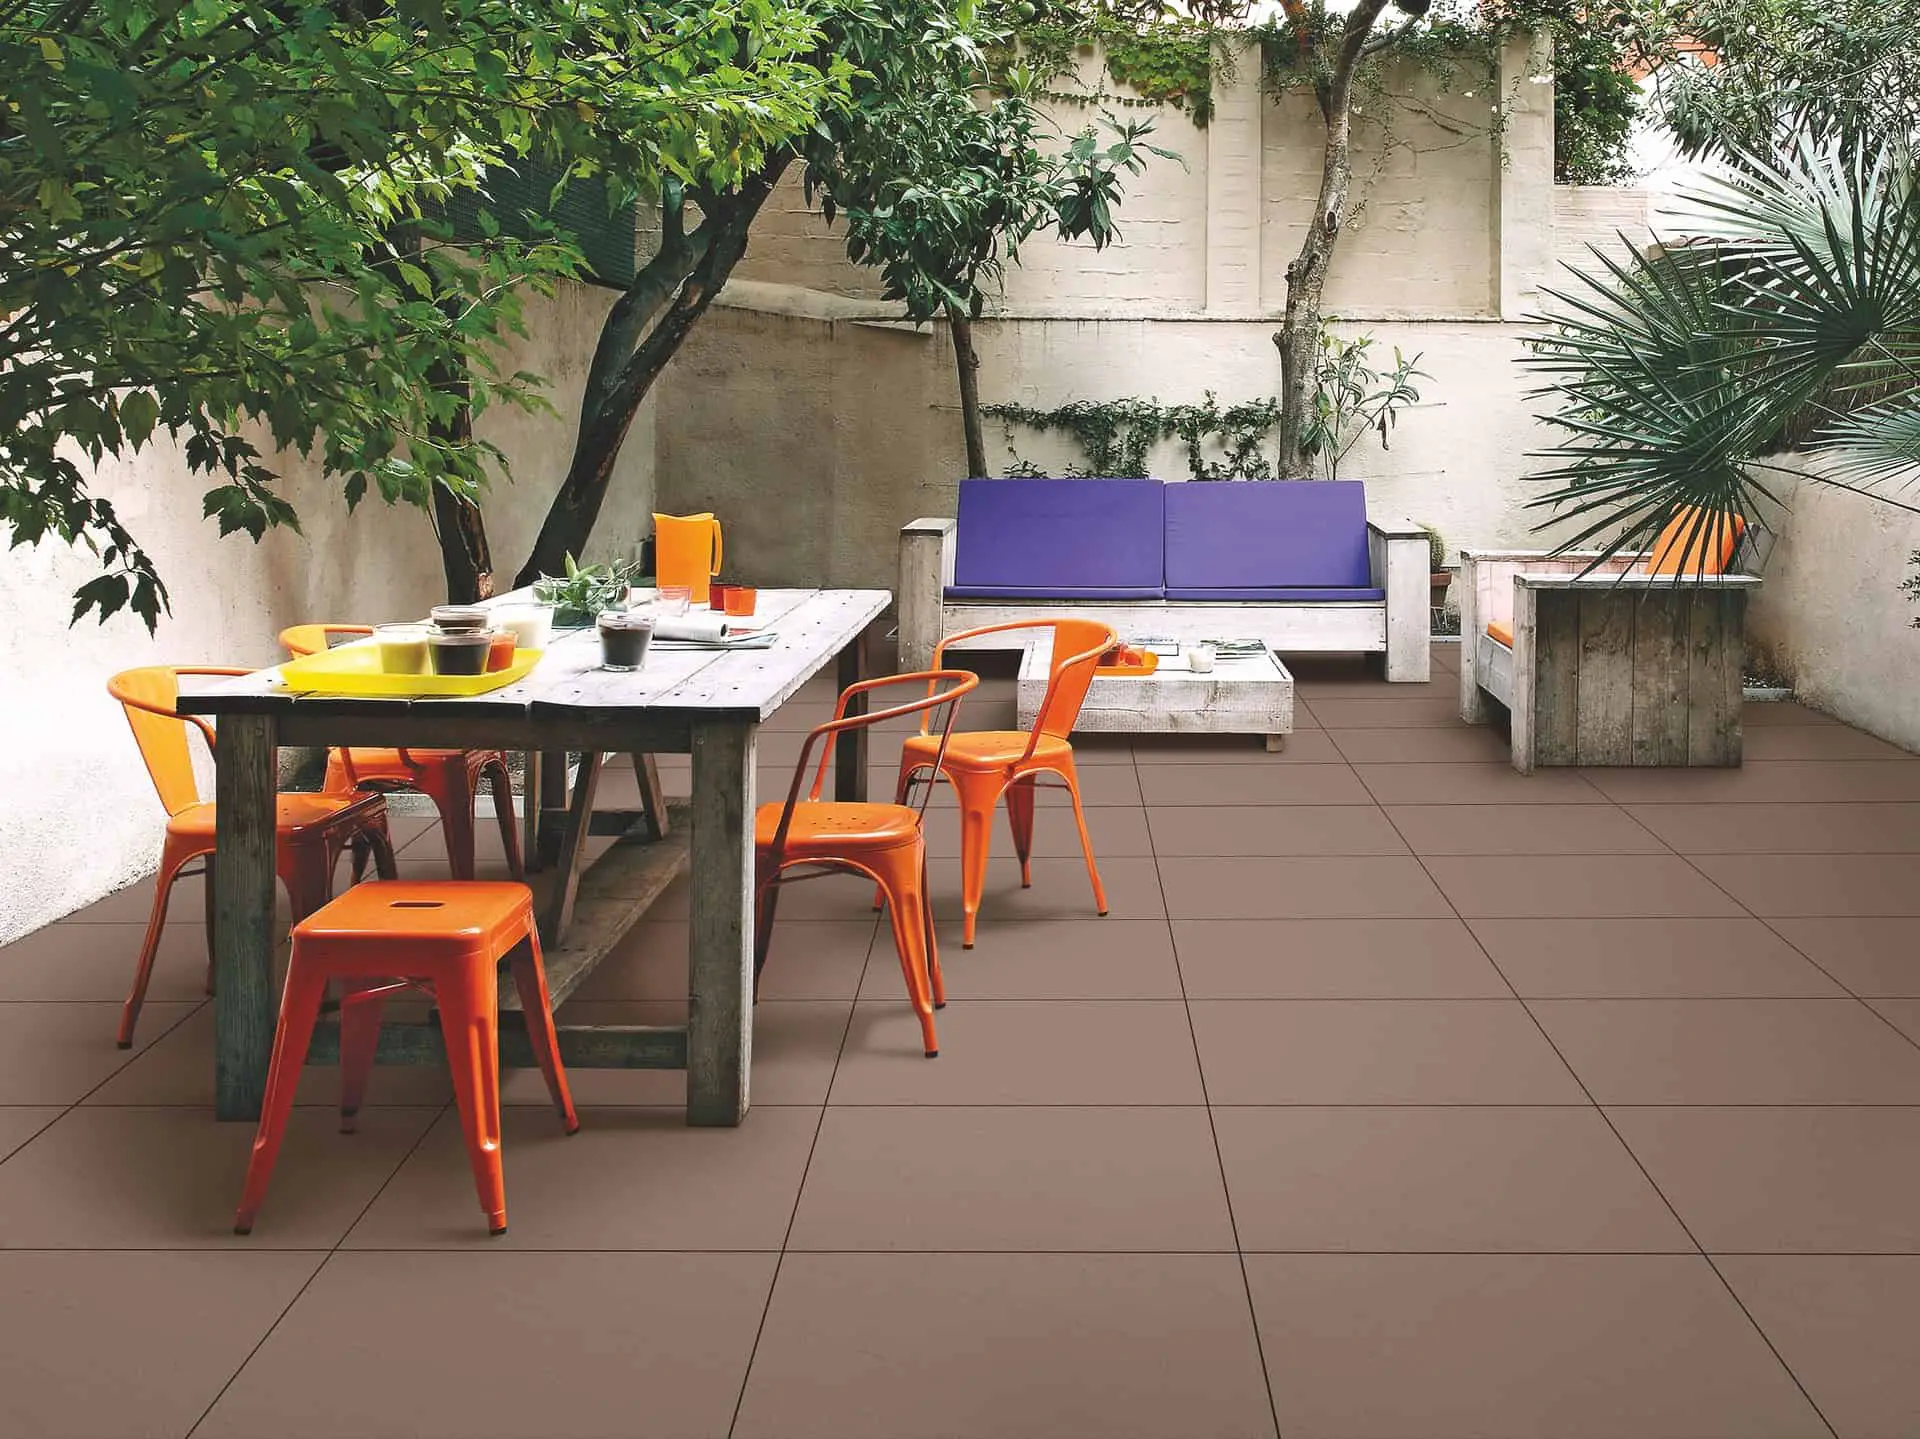 outdoor patio set on a tile floor